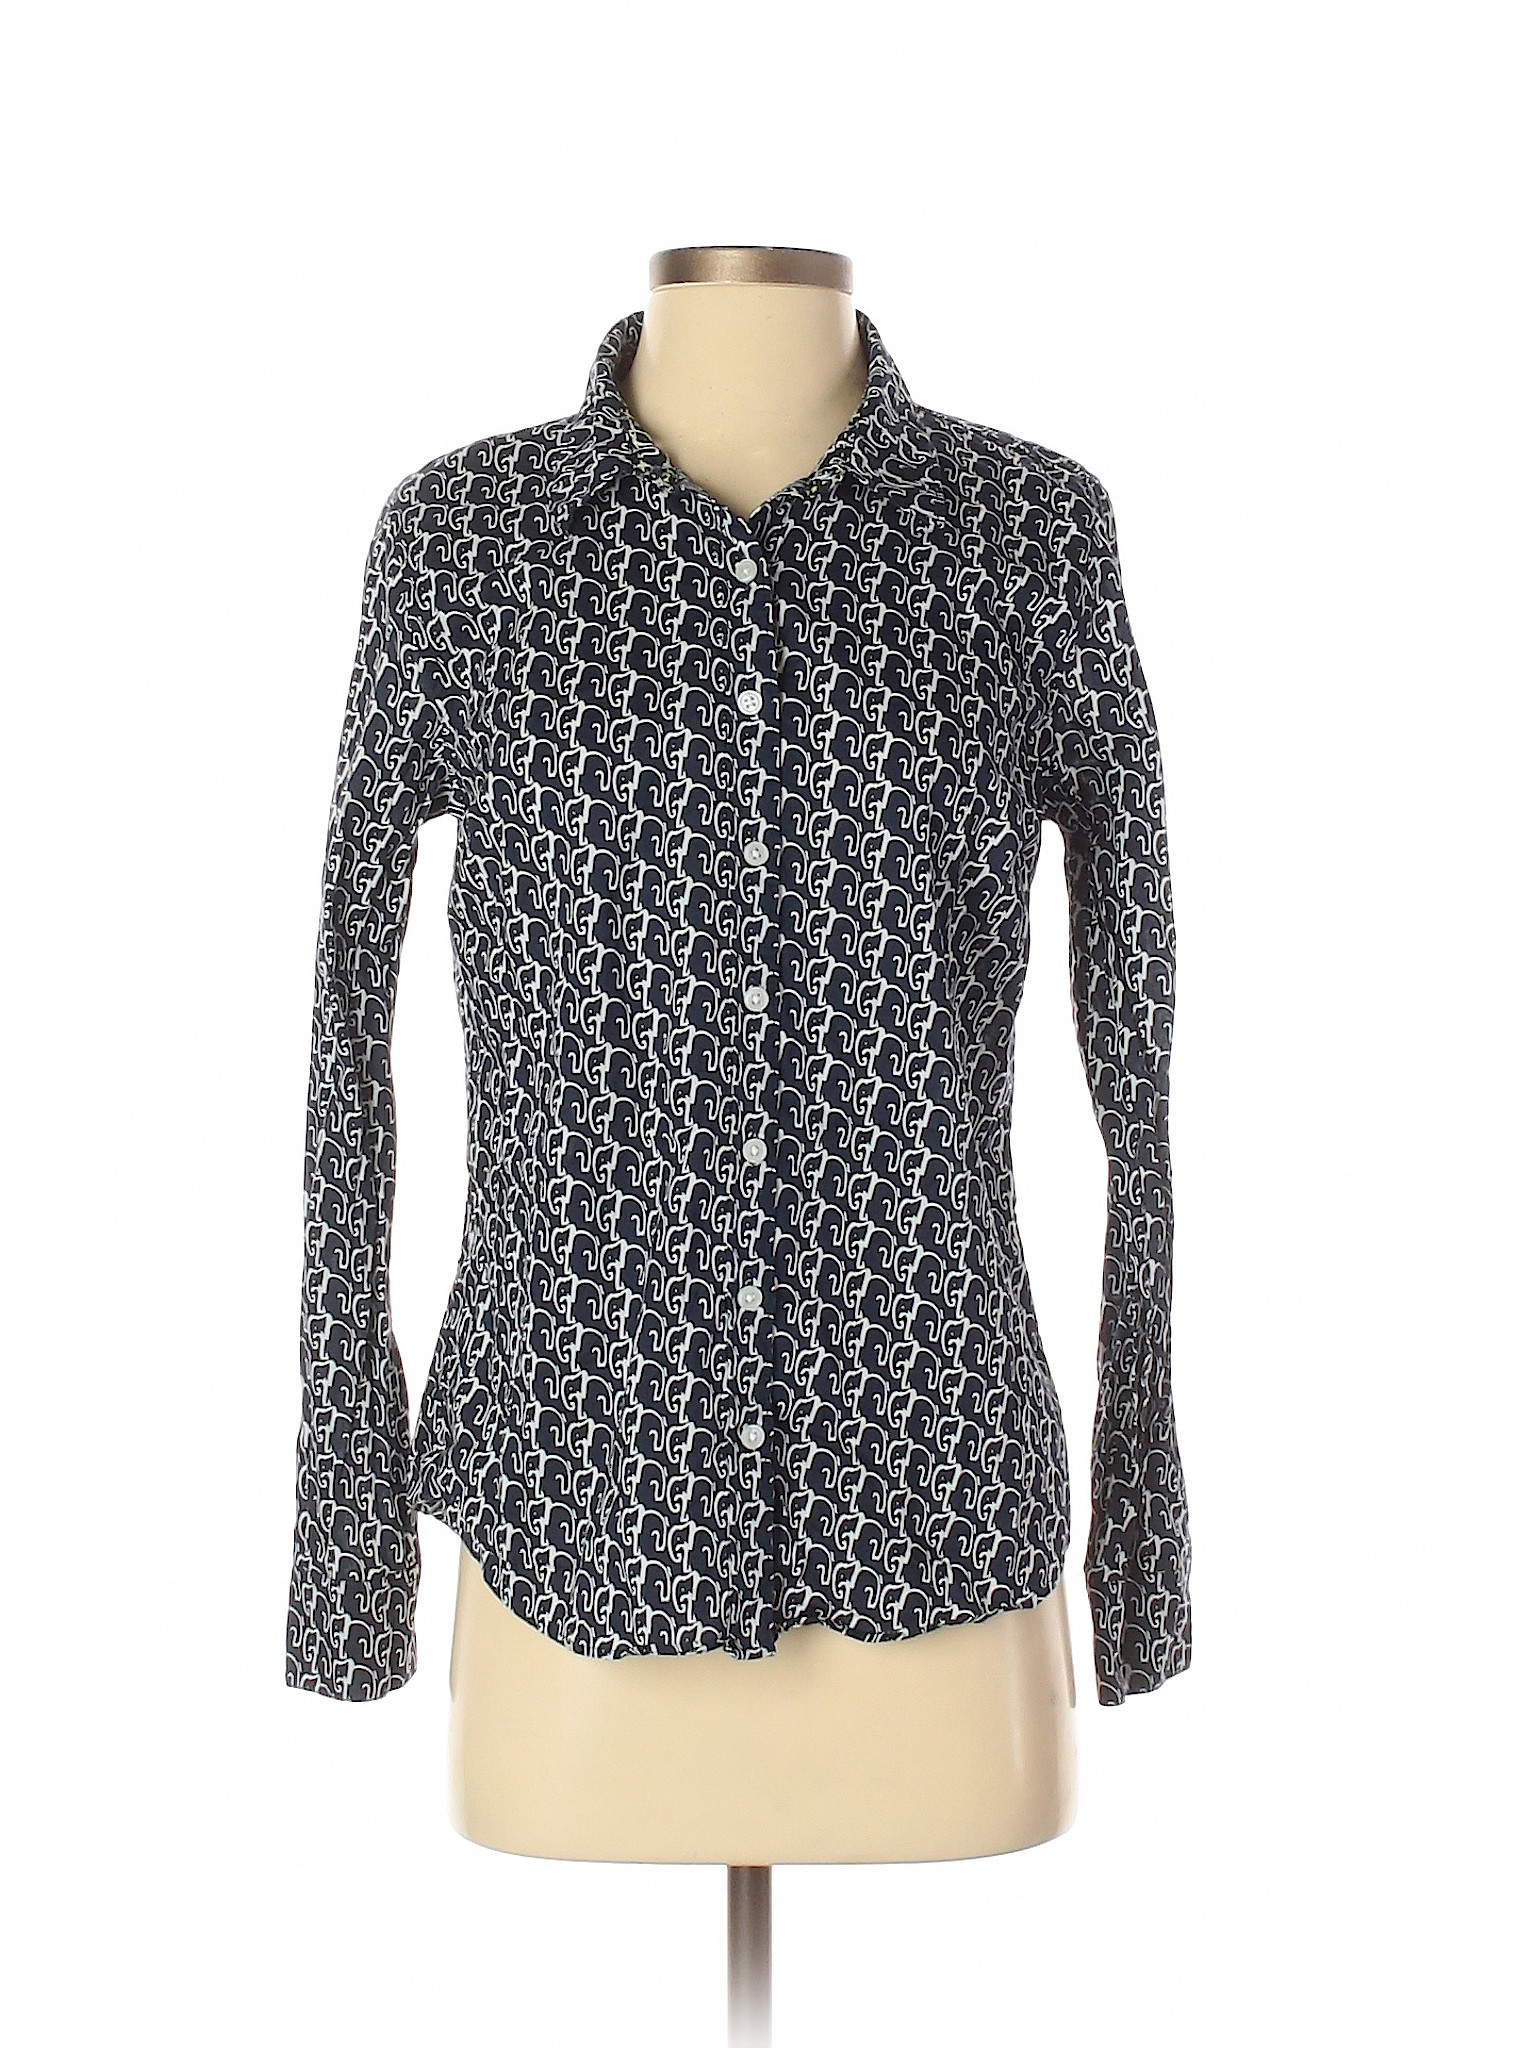 Crown & Ivy Women Blue Long Sleeve Button-Down Shirt S | eBay